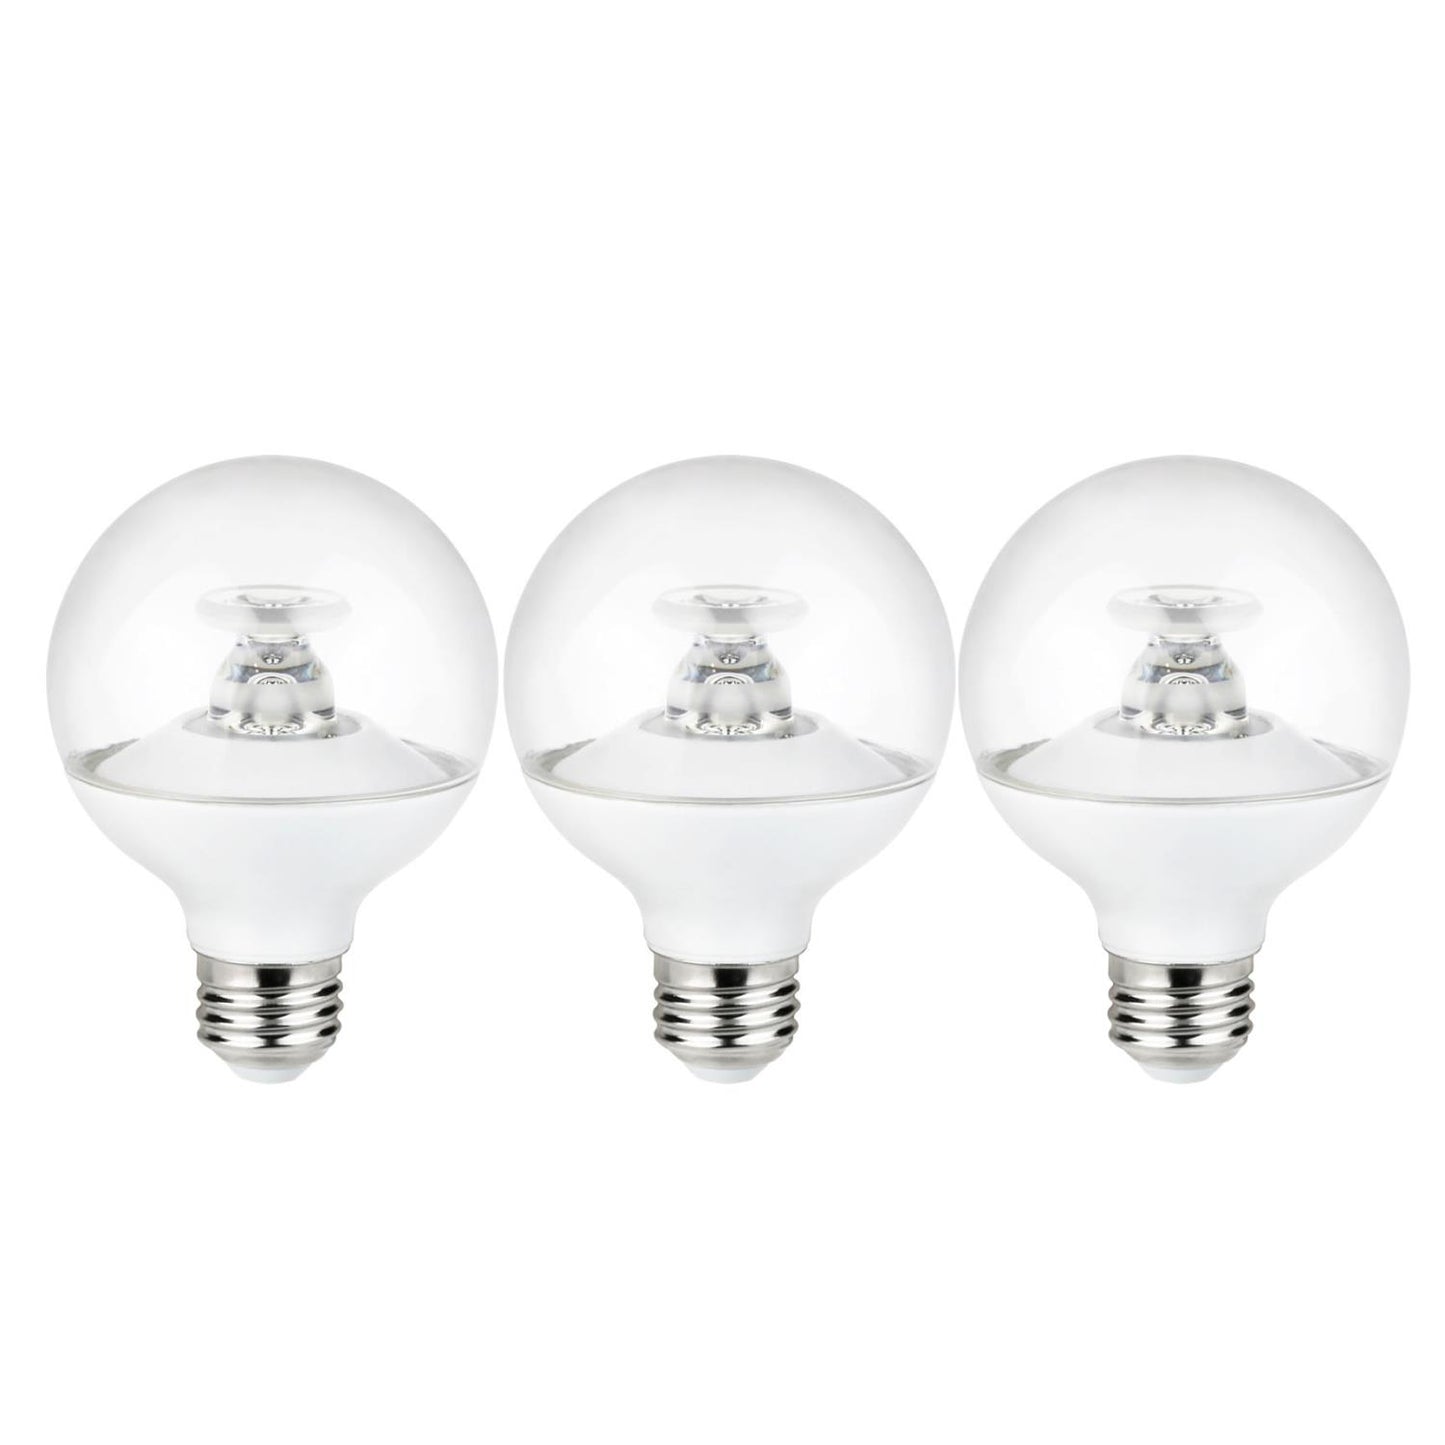 Sunlite 40363-SU LED G25 Globe Light Bulb, 27K - Warm White, 7 Watts (60W Equivalent), Medium (E26) Base, Dimmable, Energy Star Certified, Clear 3 Pack